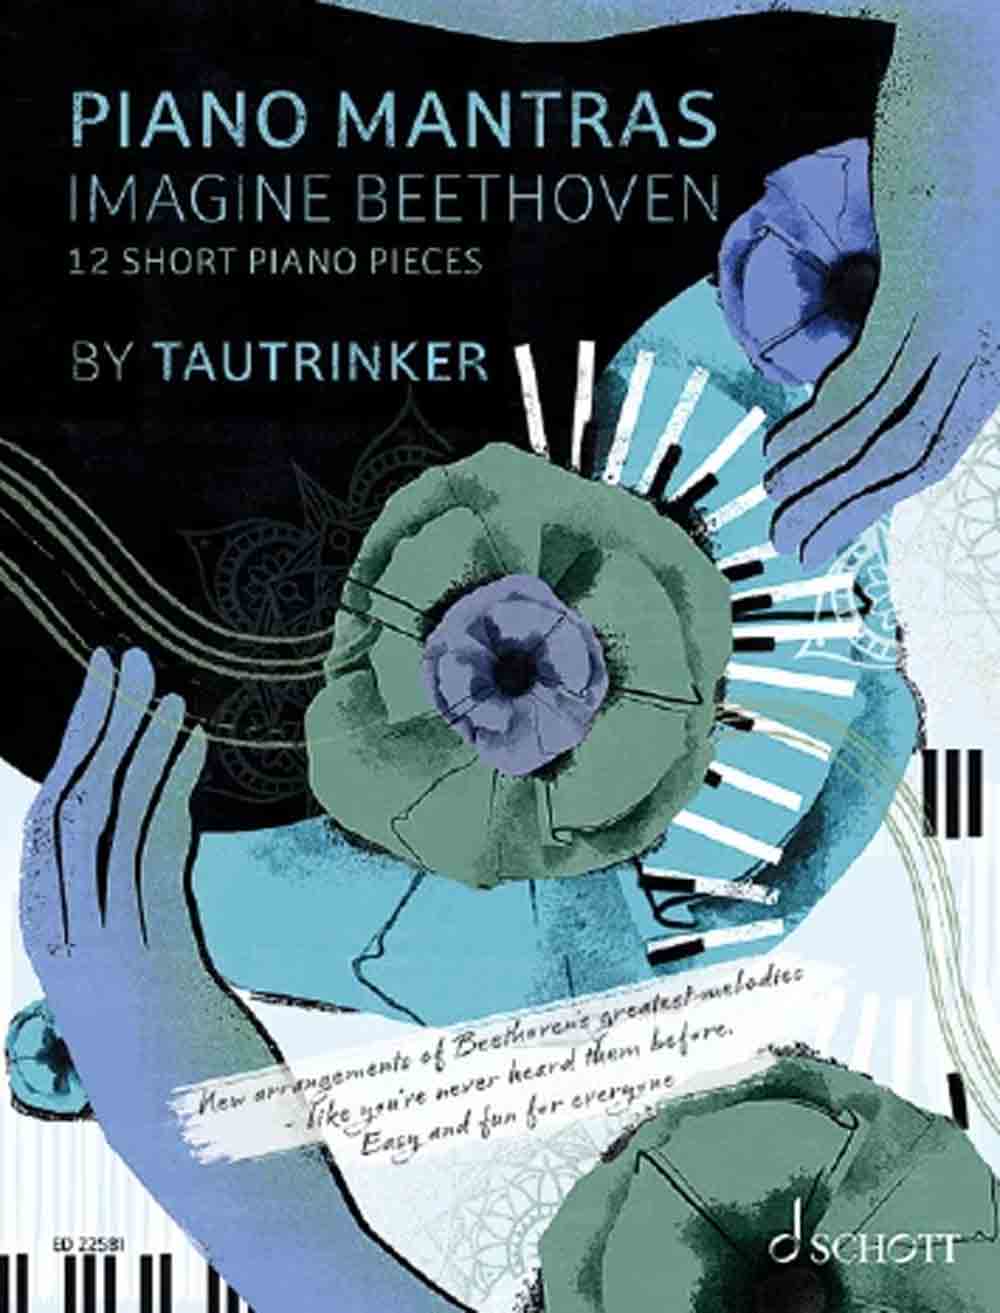 Imagine Beethoven, alte Meister neu entdecken, Neuerscheinung bei Schott Music